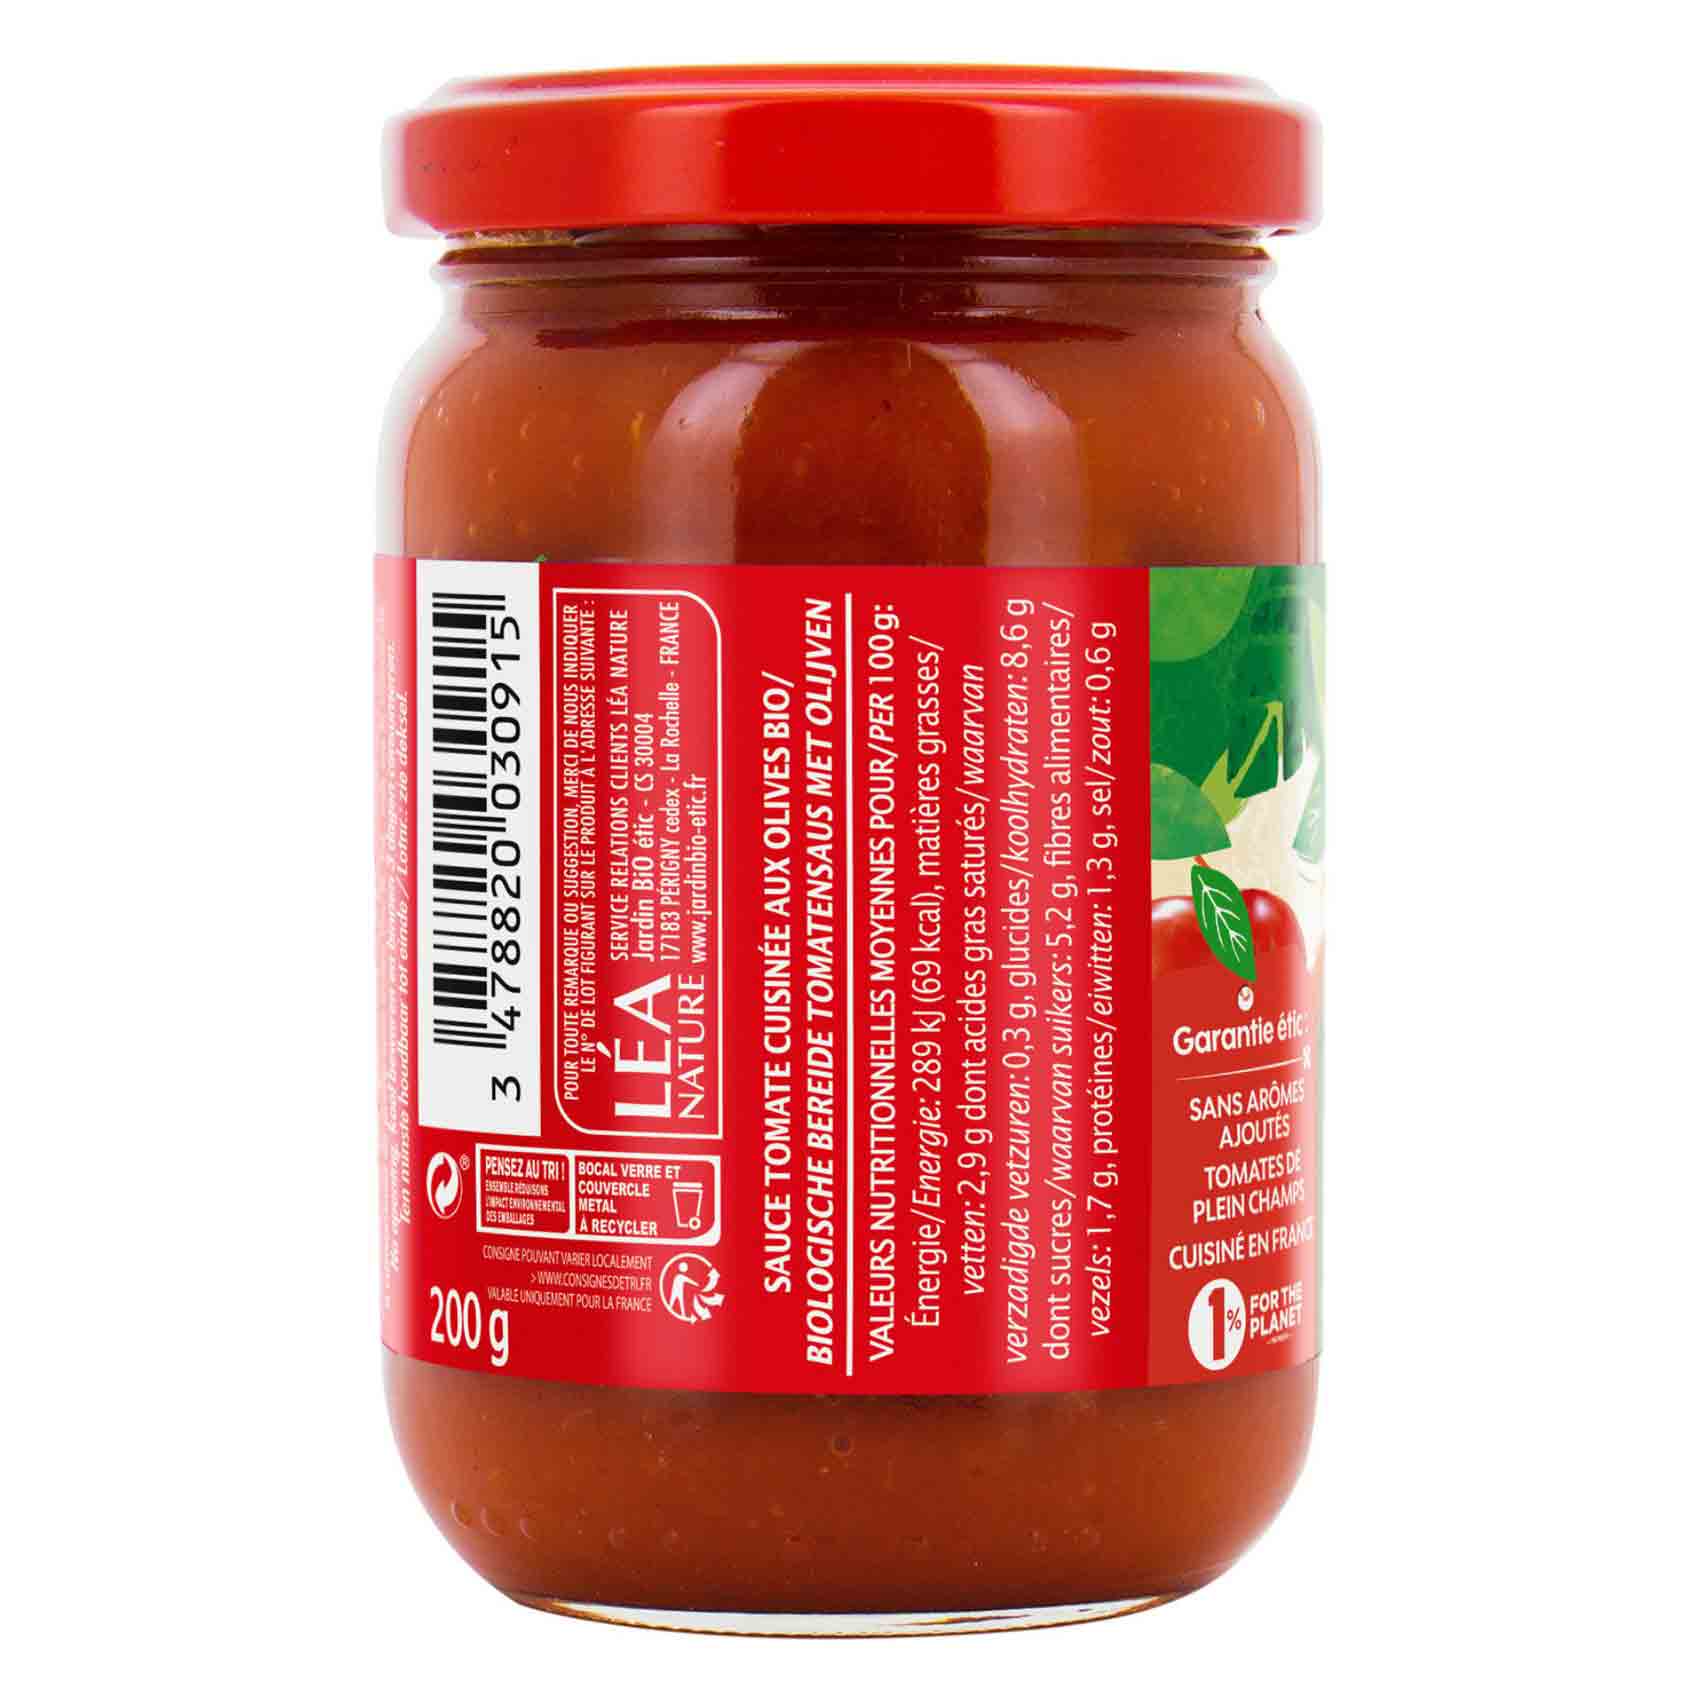 Jardin Bio Etic Tomato Sauce 190g